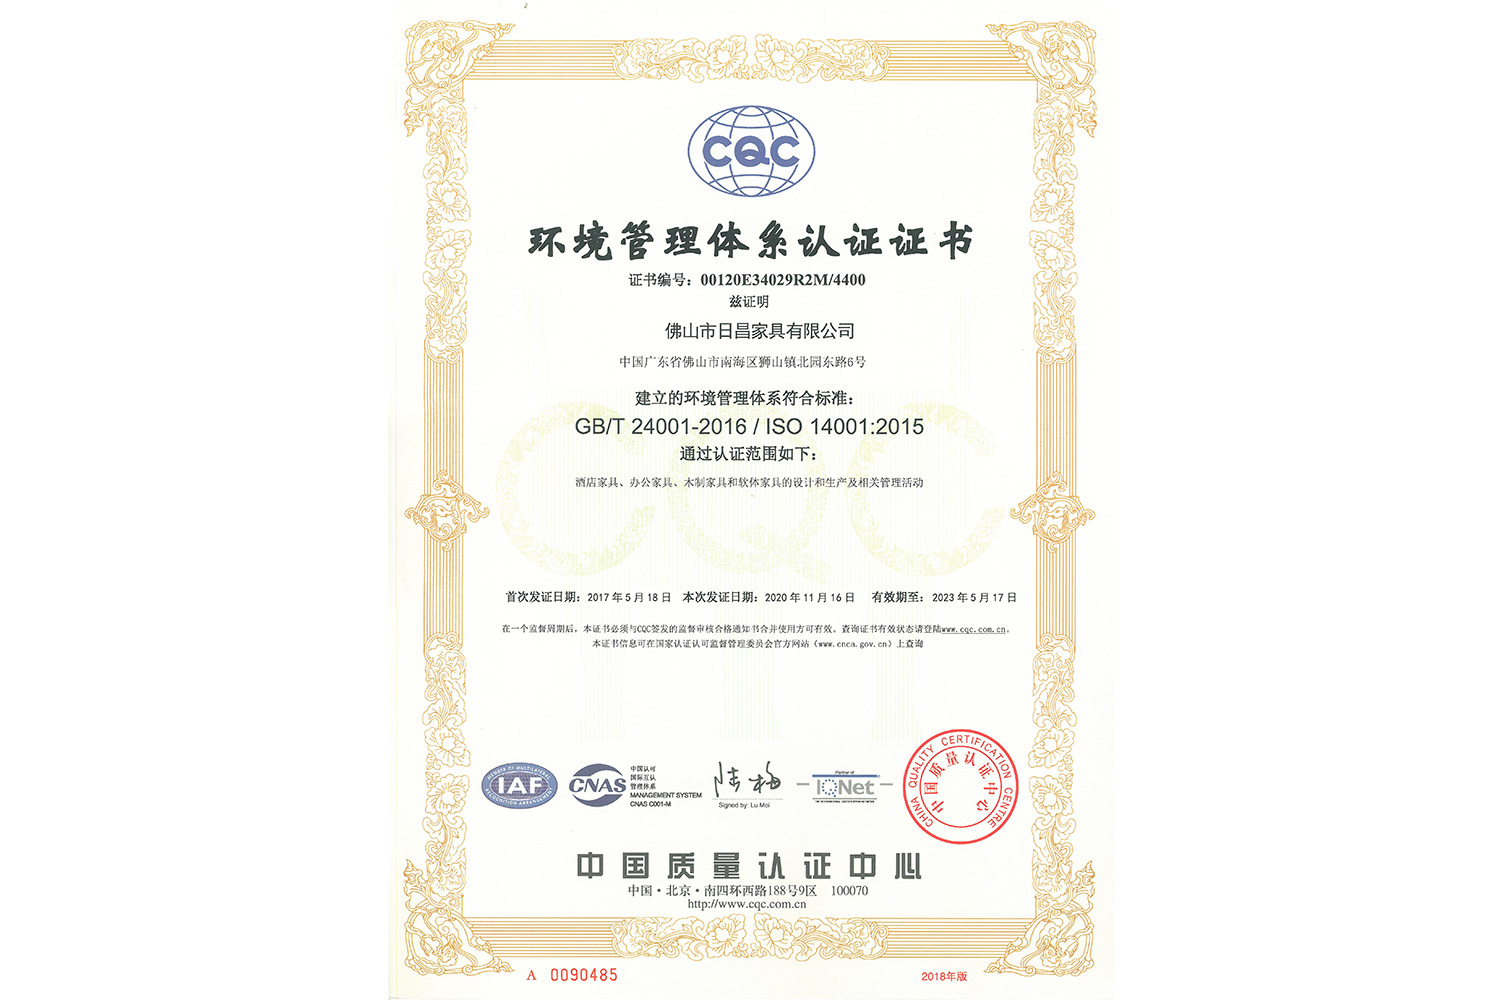 Environmental Management System Certification Certificate (Original)